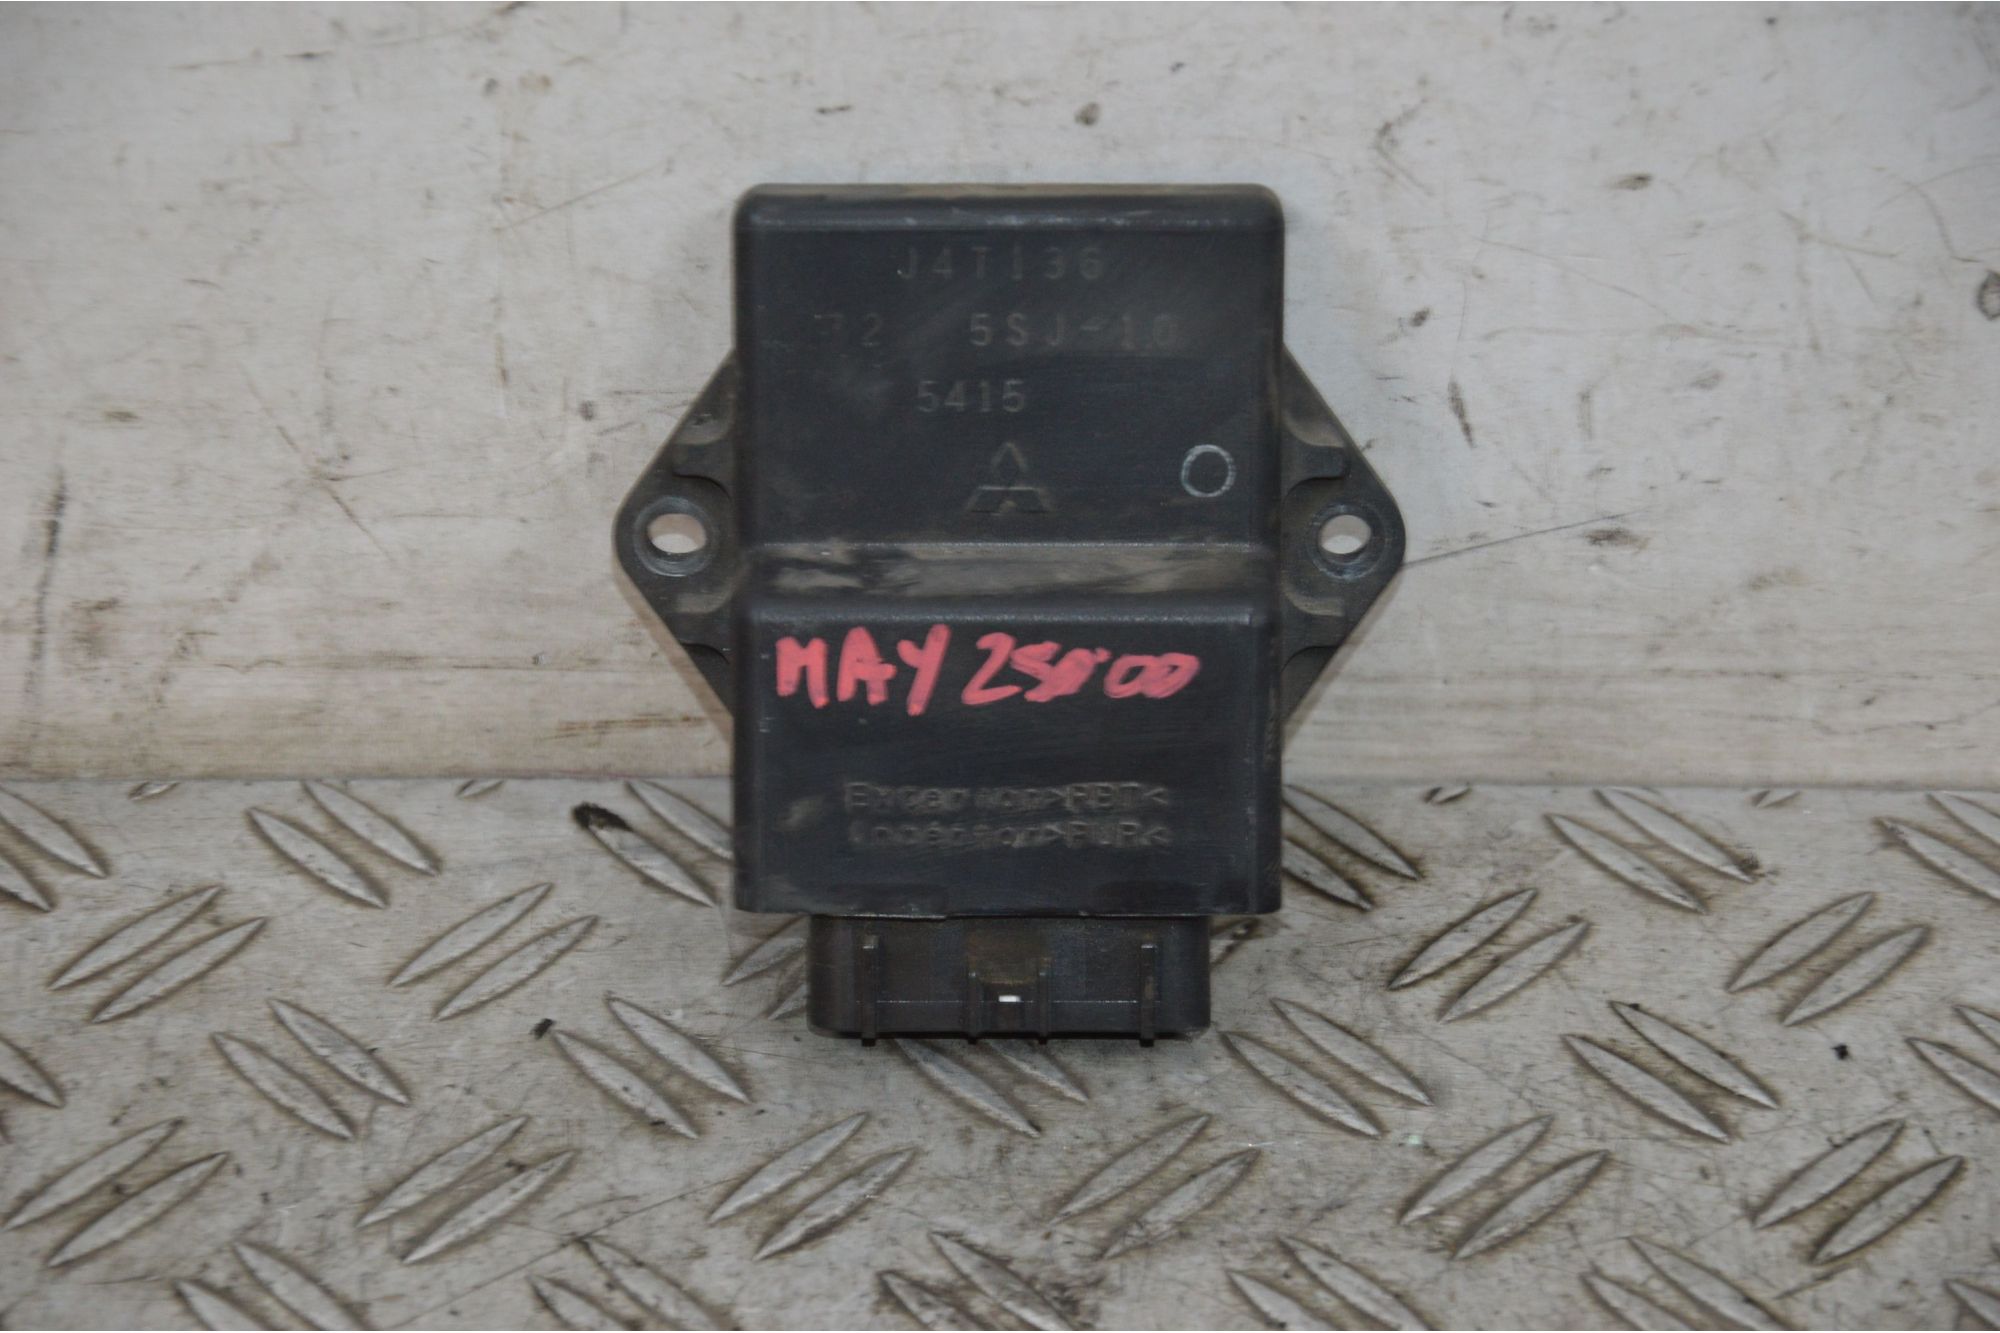 Centralina Accensione Yamaha Majesty 250 dal 1999 al 2006 Cod J4T136  1707141777431